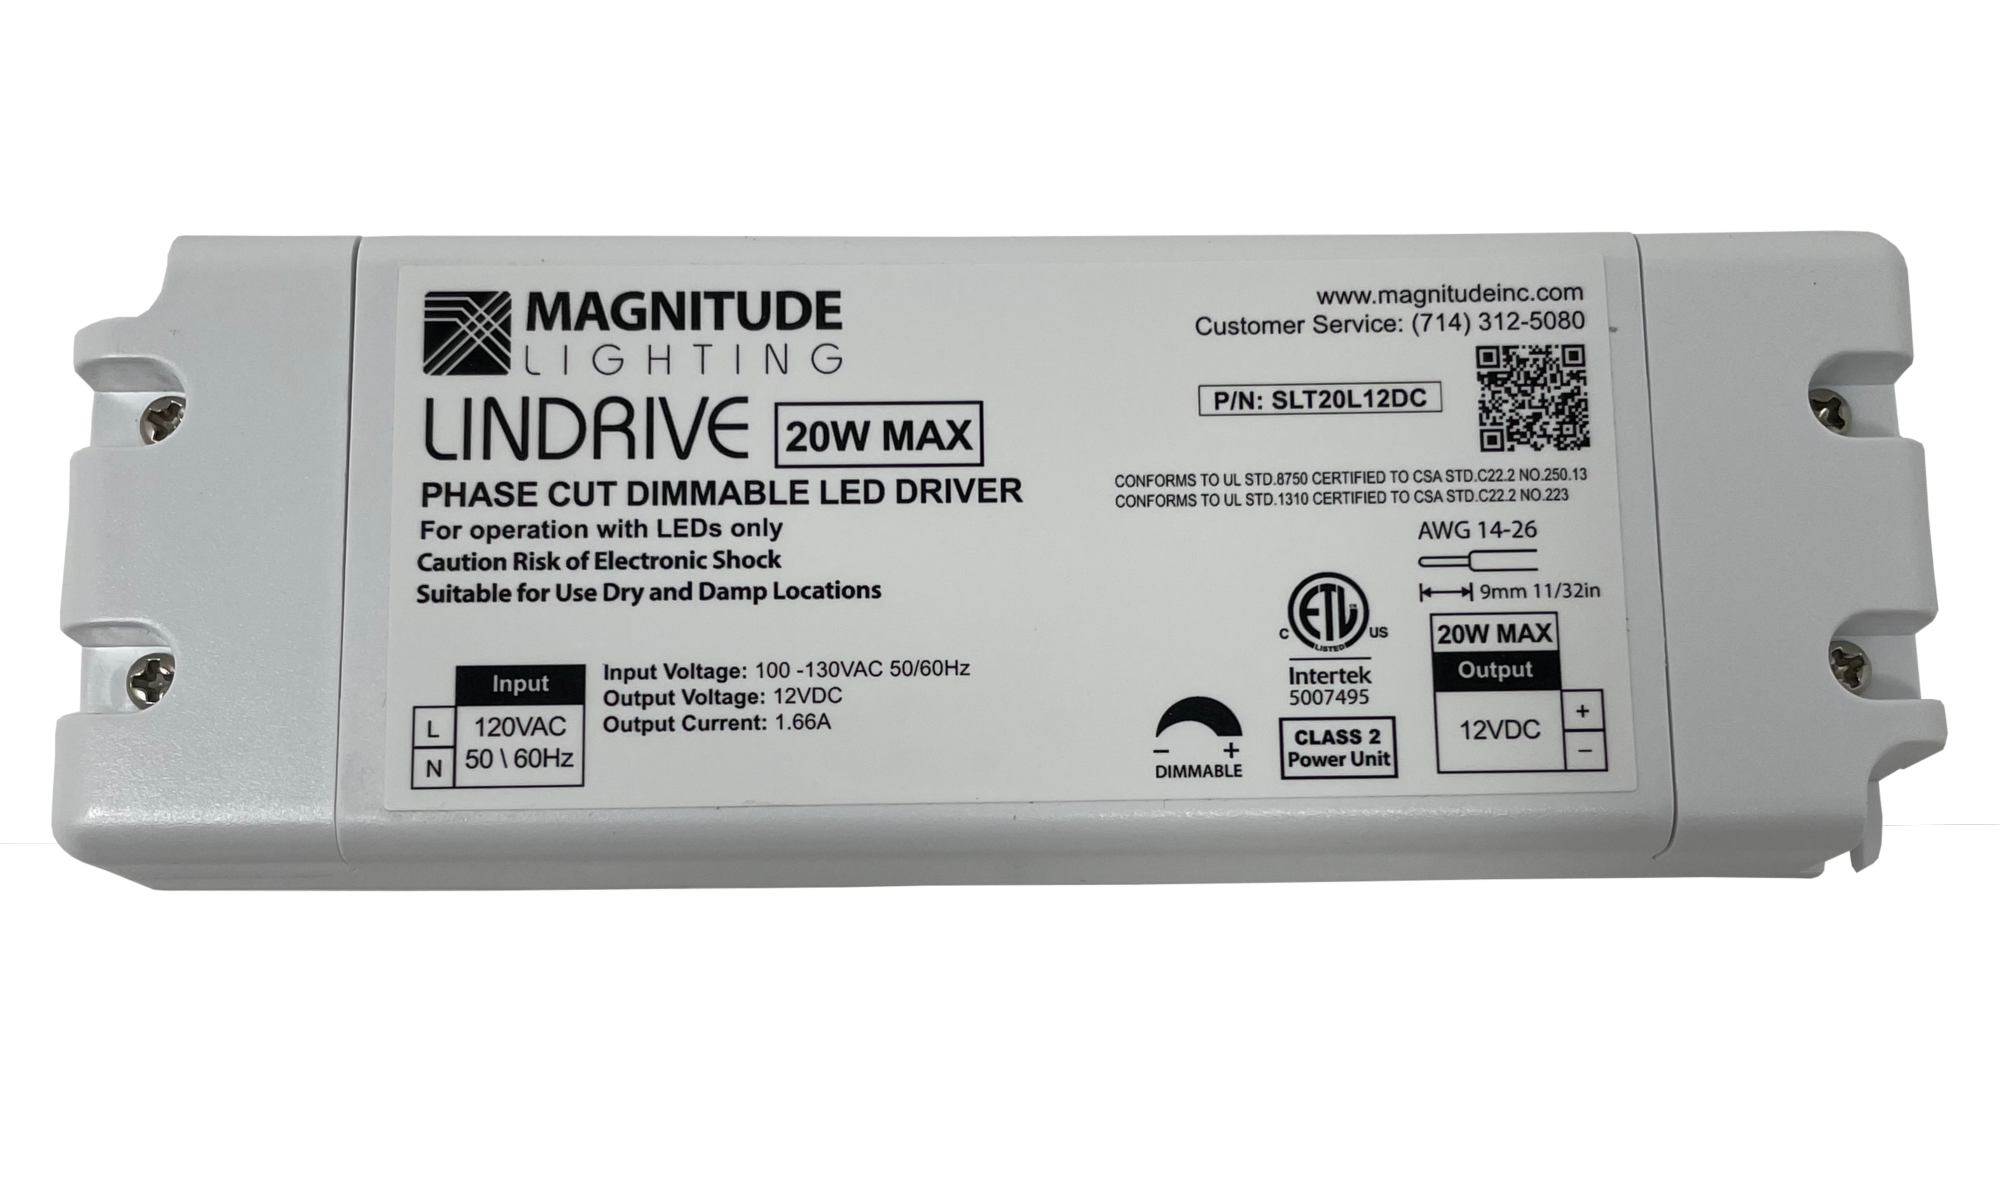 Dimmable LED Driver - 12V Magnitude LinDrive | LED